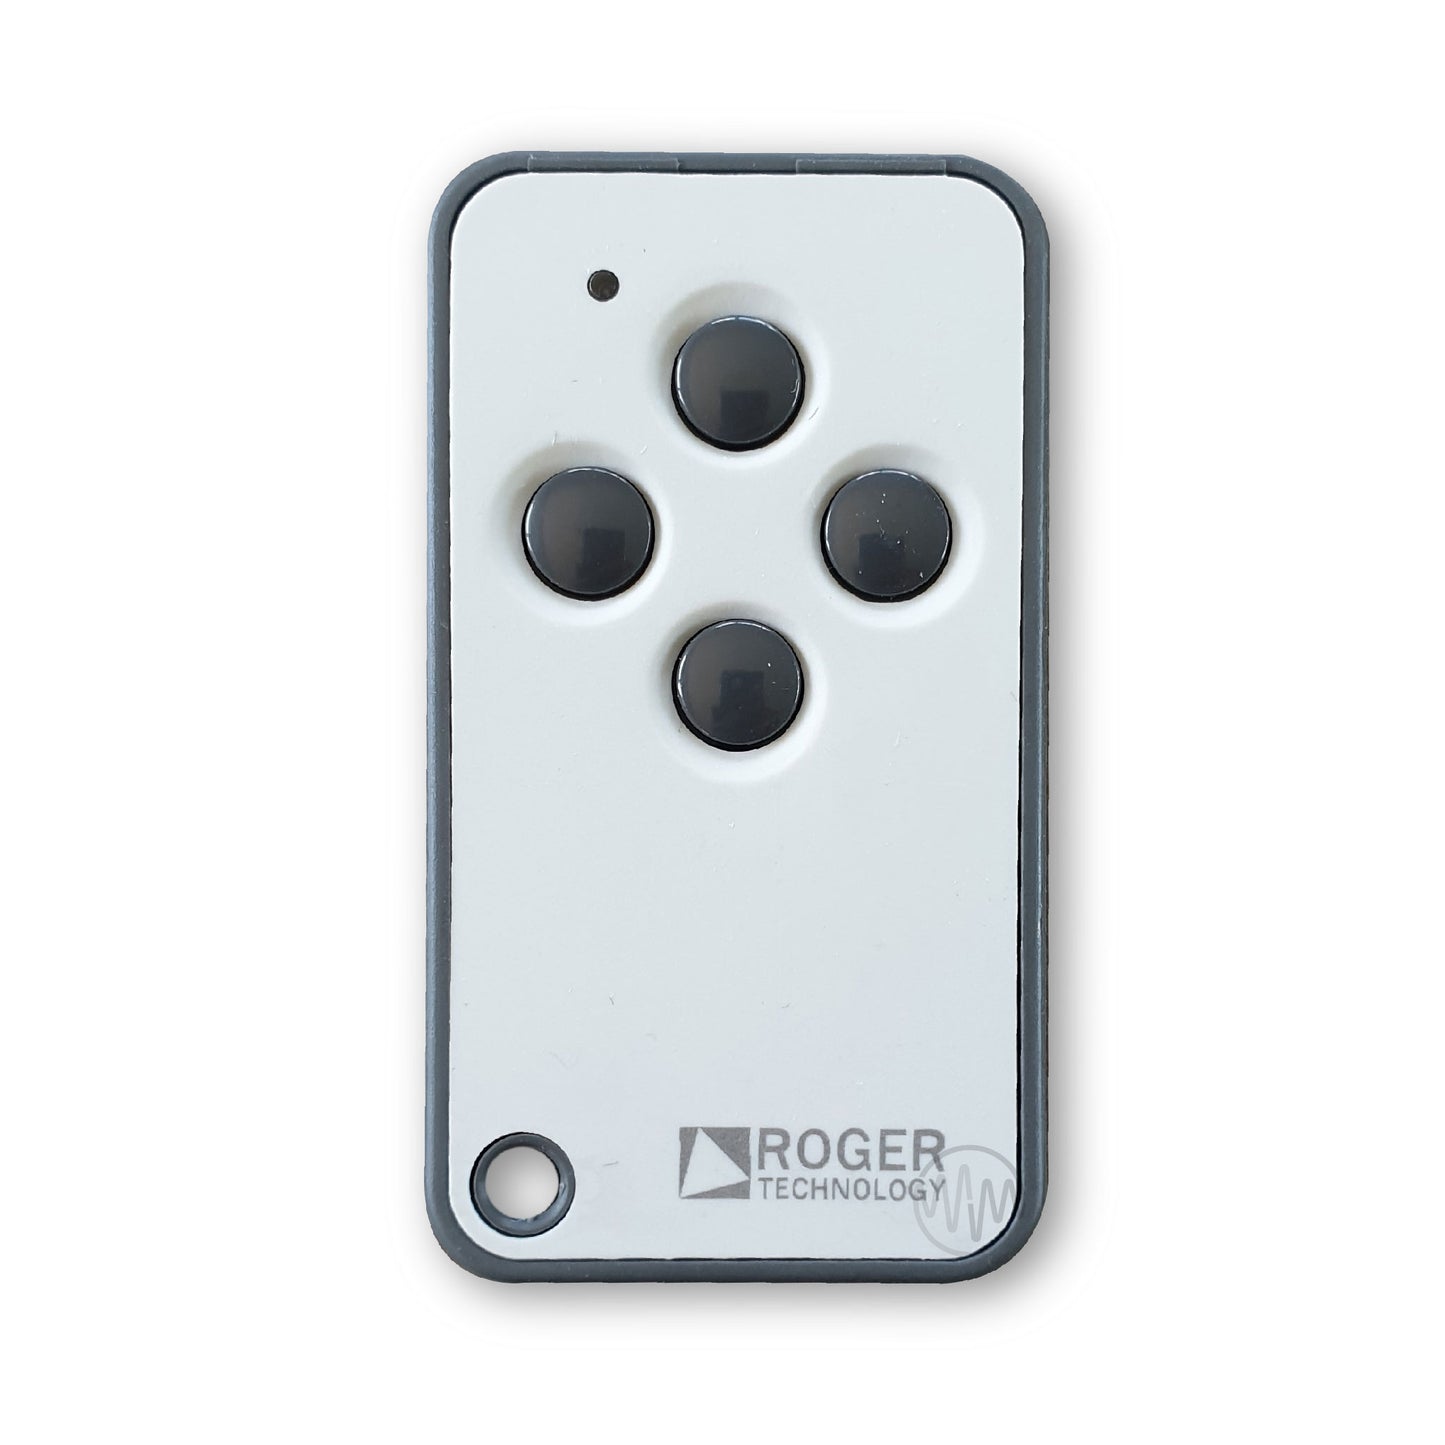 Roger Technology E80-TX54R/4 Gate Remote